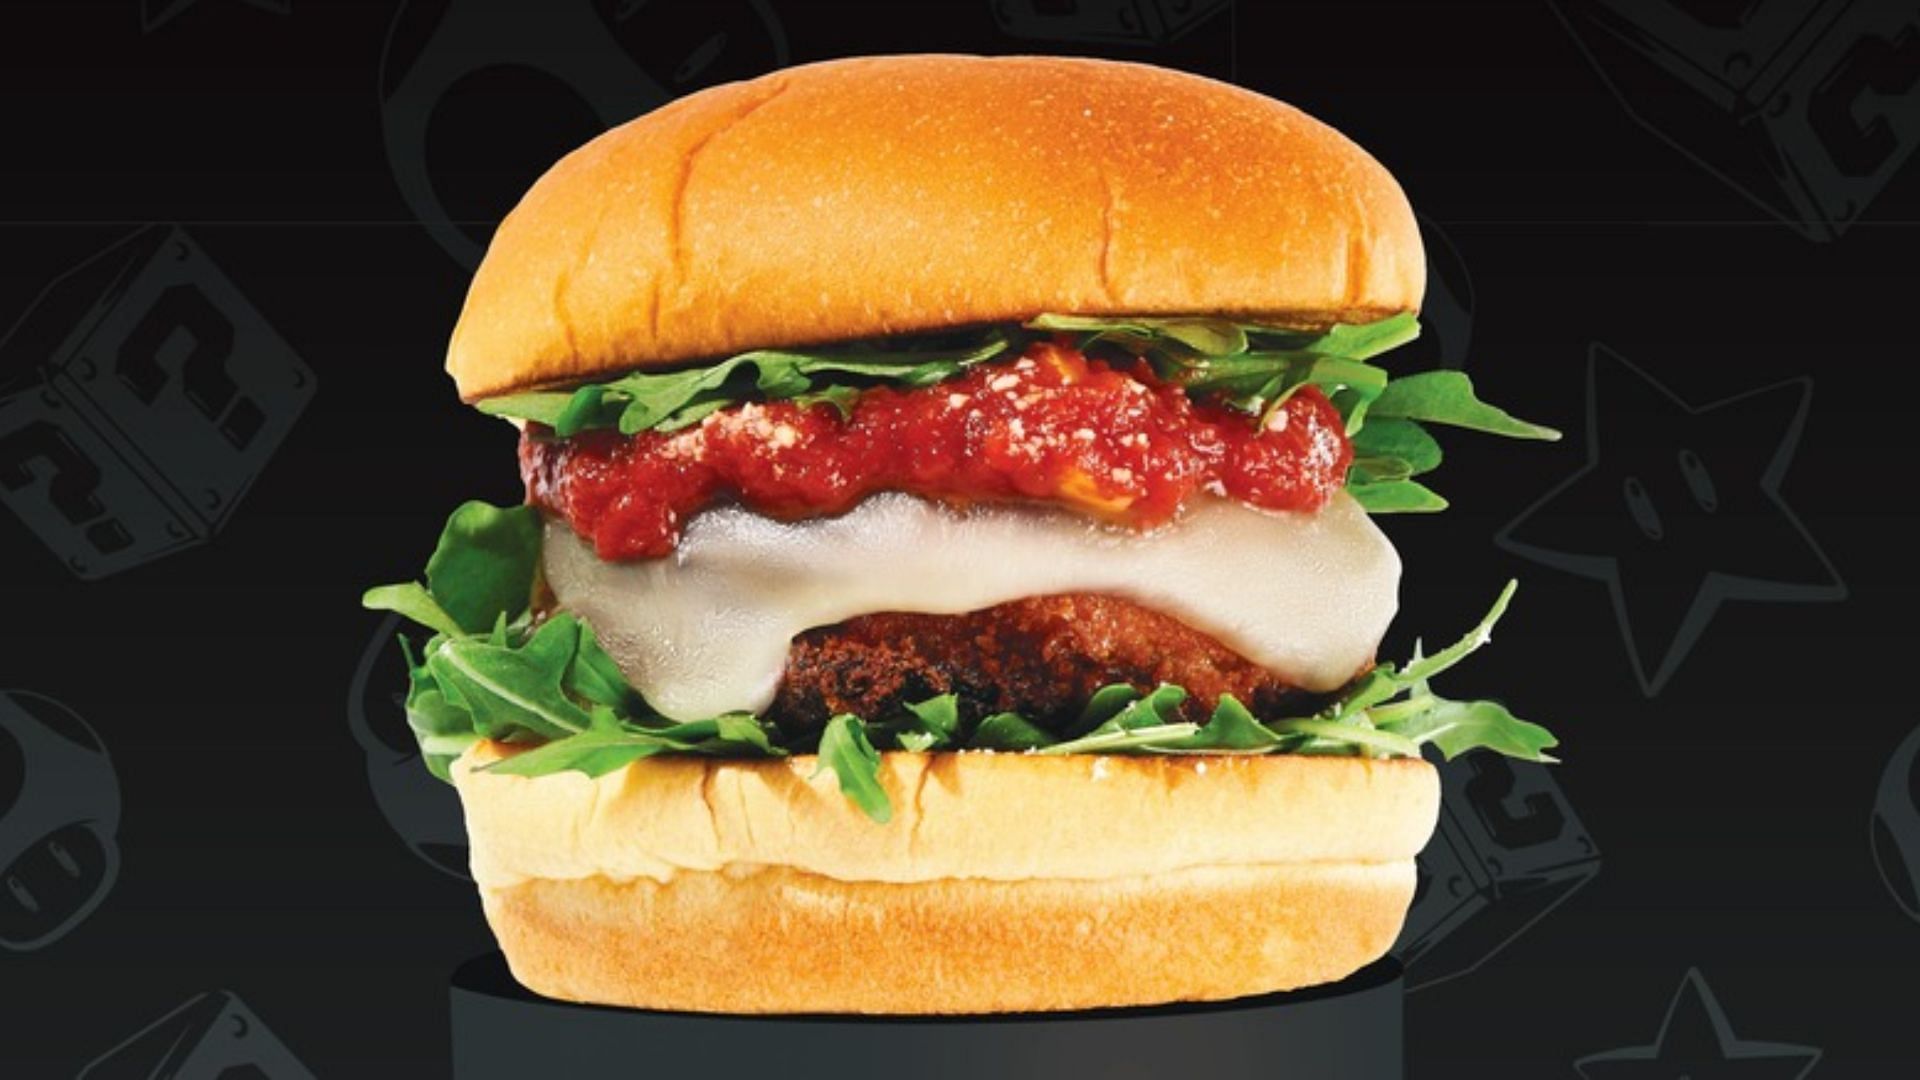 the new Shroom Burger from the super exclusive Super Mario Bros menu (Image via Shake-Shack)